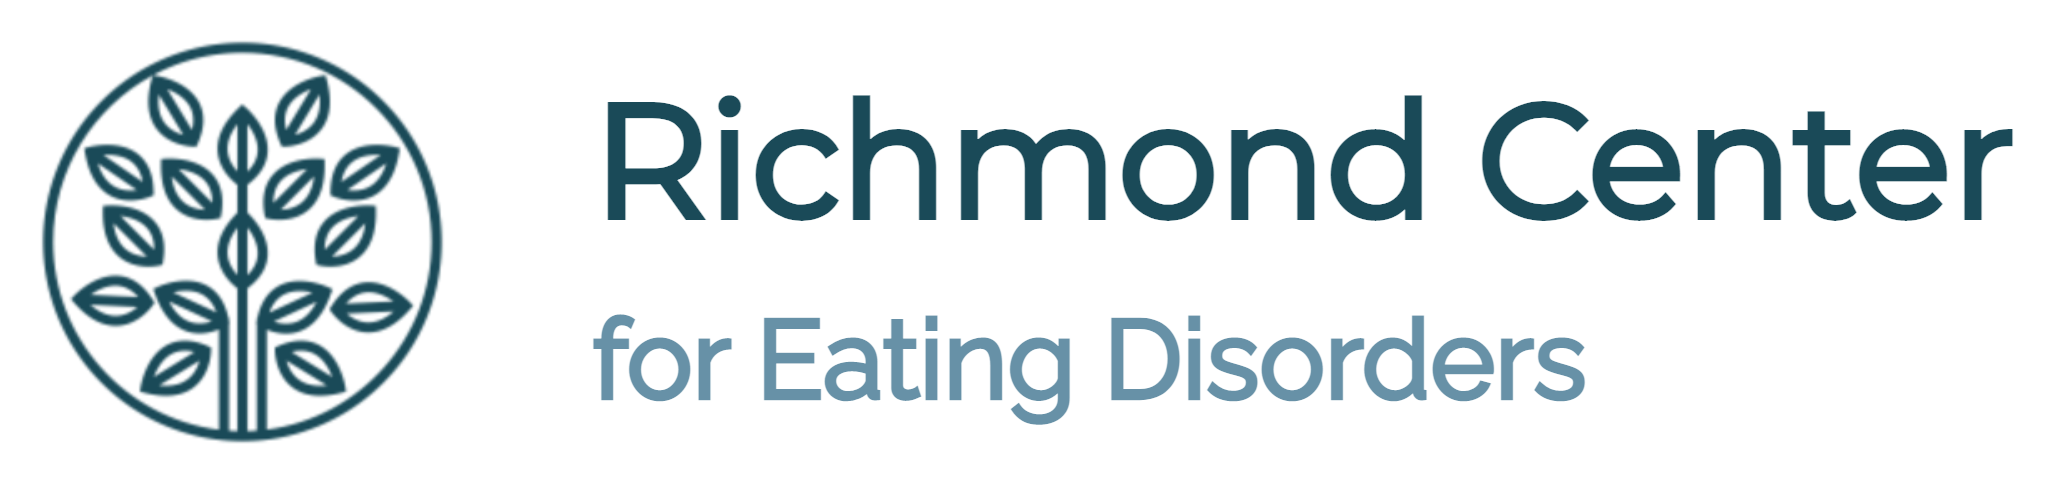 Richmond Center for Eating Disorders Logo